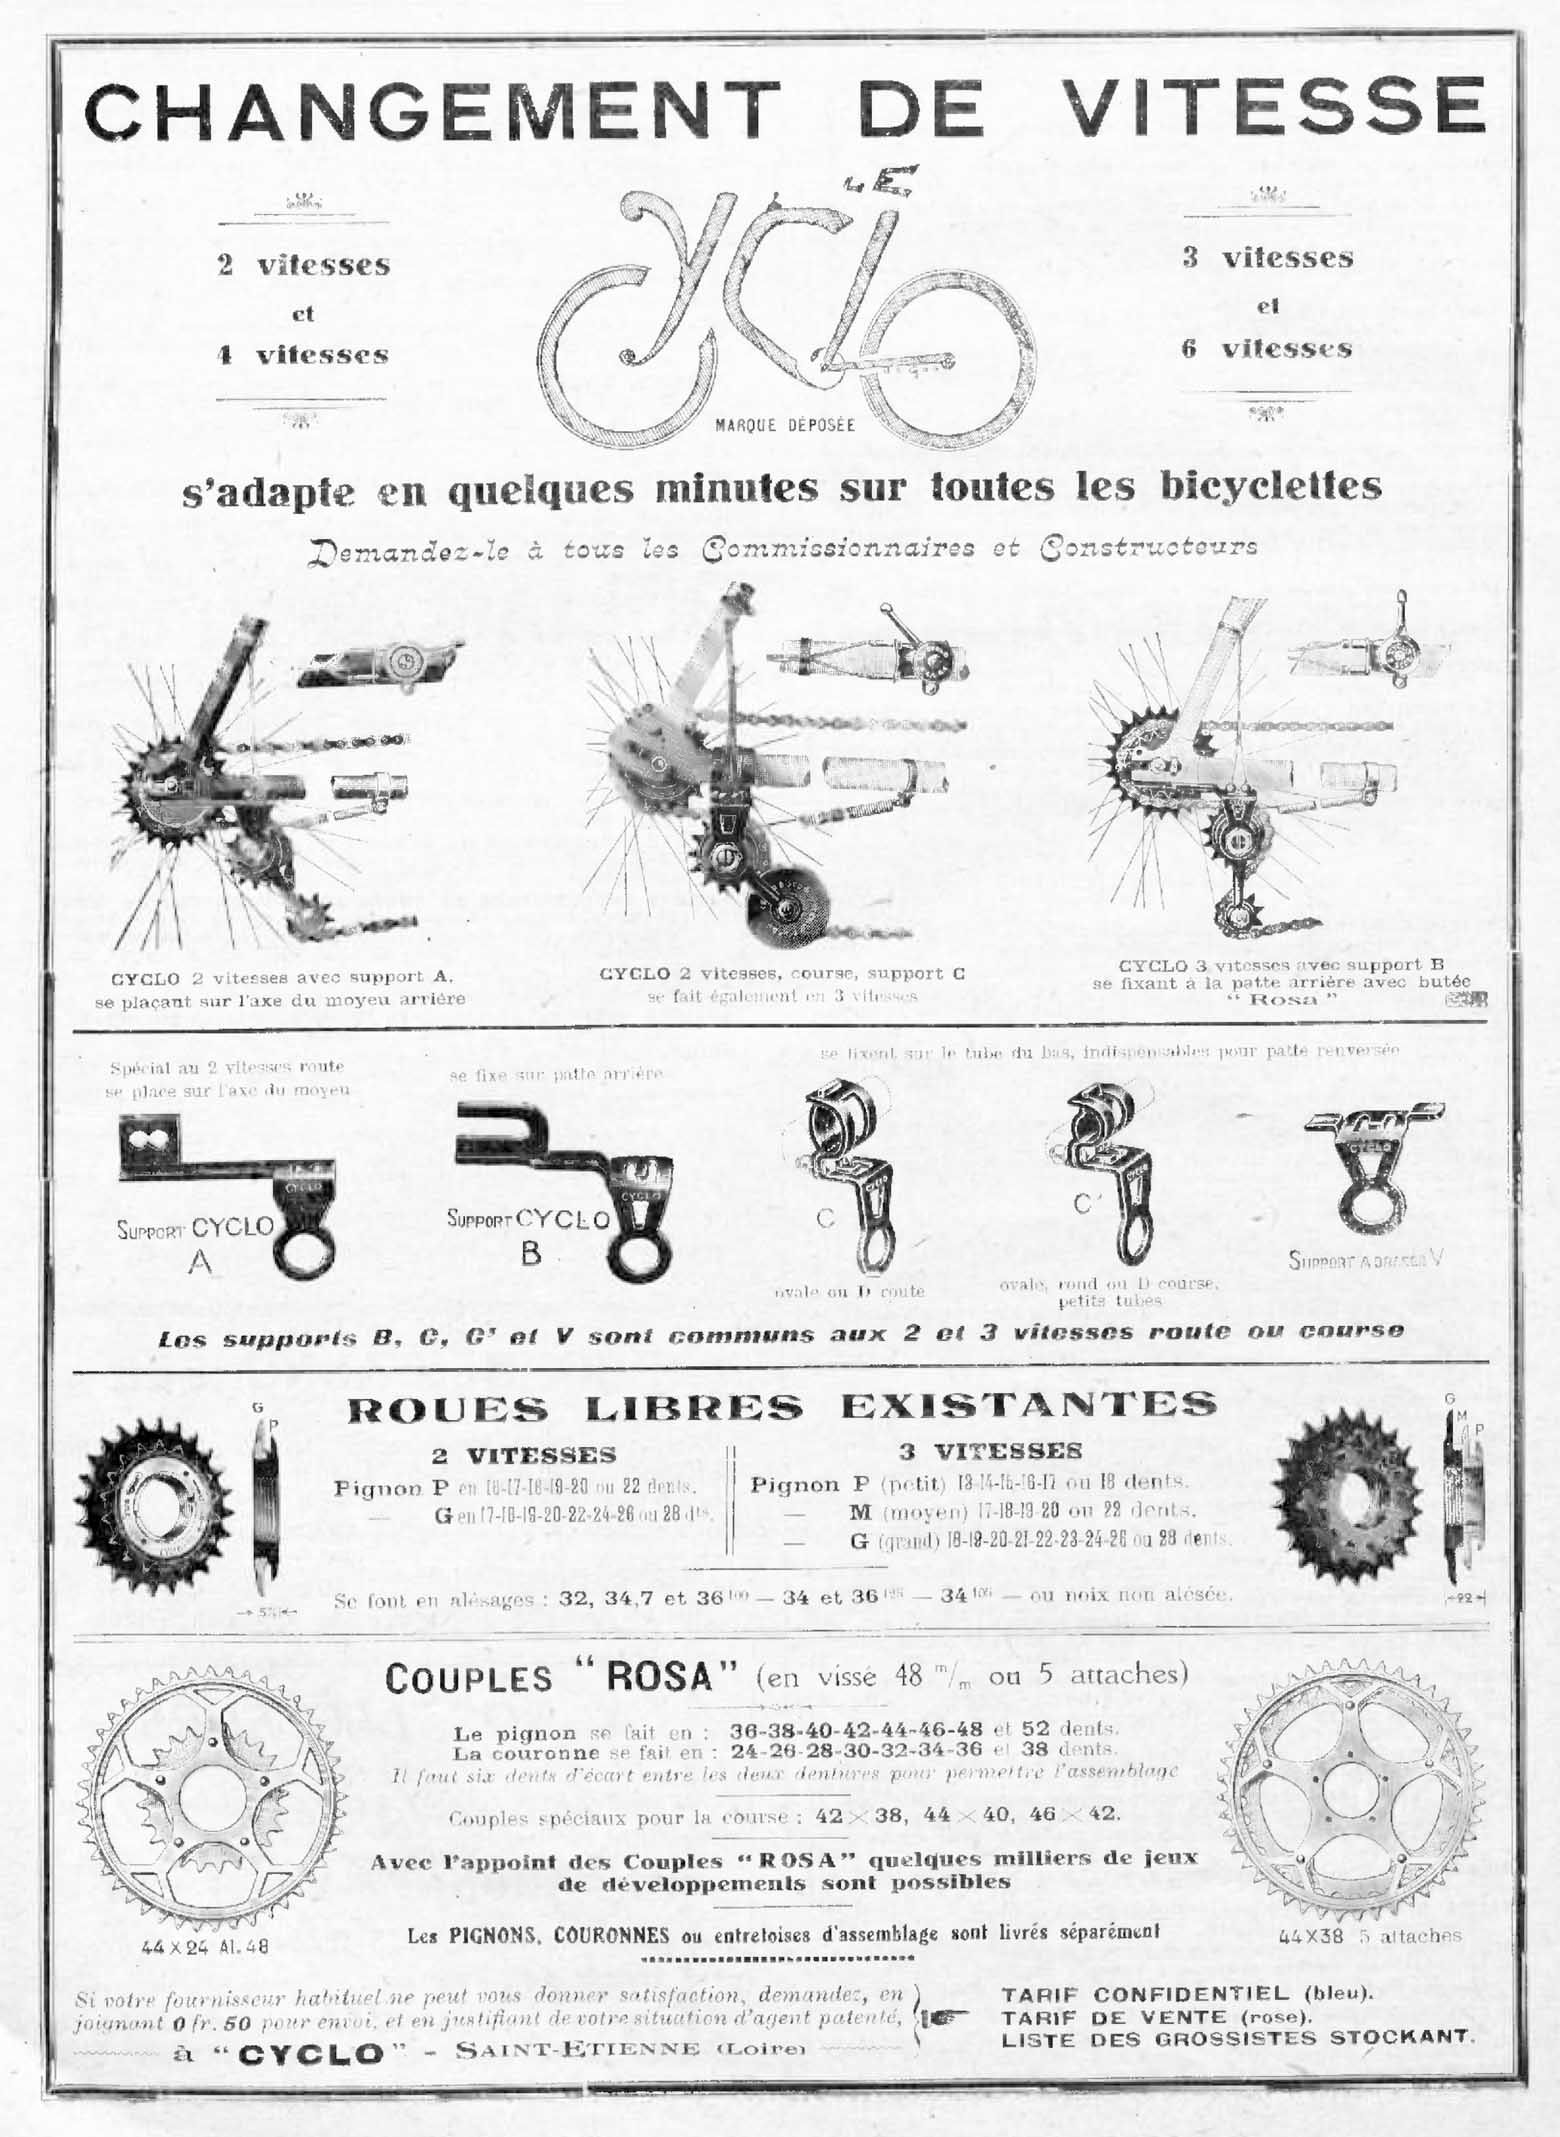 L'Industrie des Cycles et Automobiles January 1927 - Cyclo advert main image